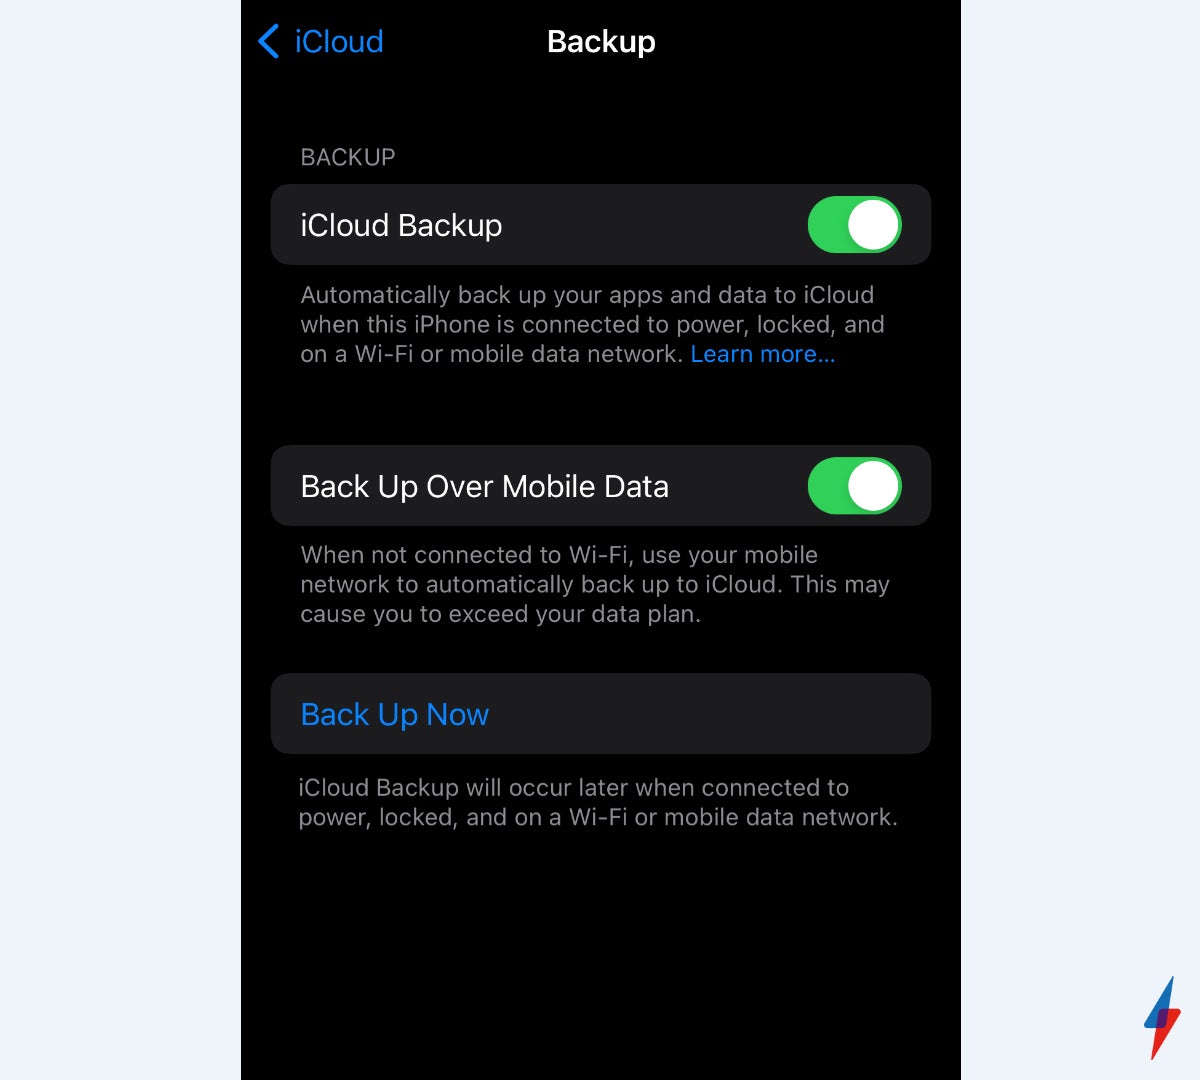 Turn on iCloud backup in iPhone